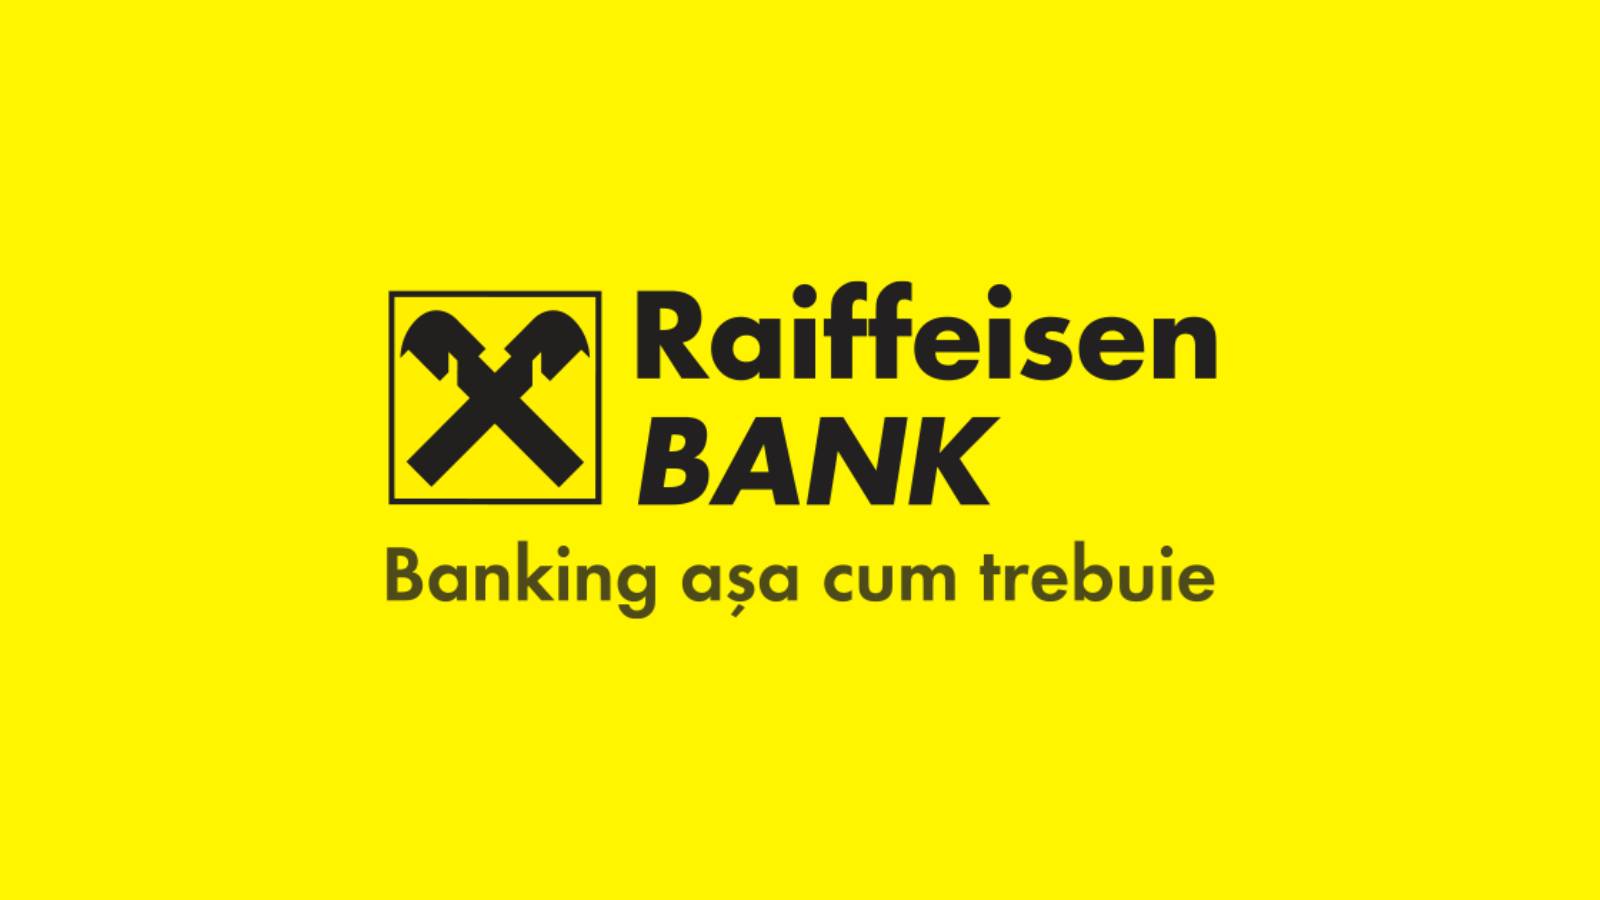 Servicio del banco Raiffeisen